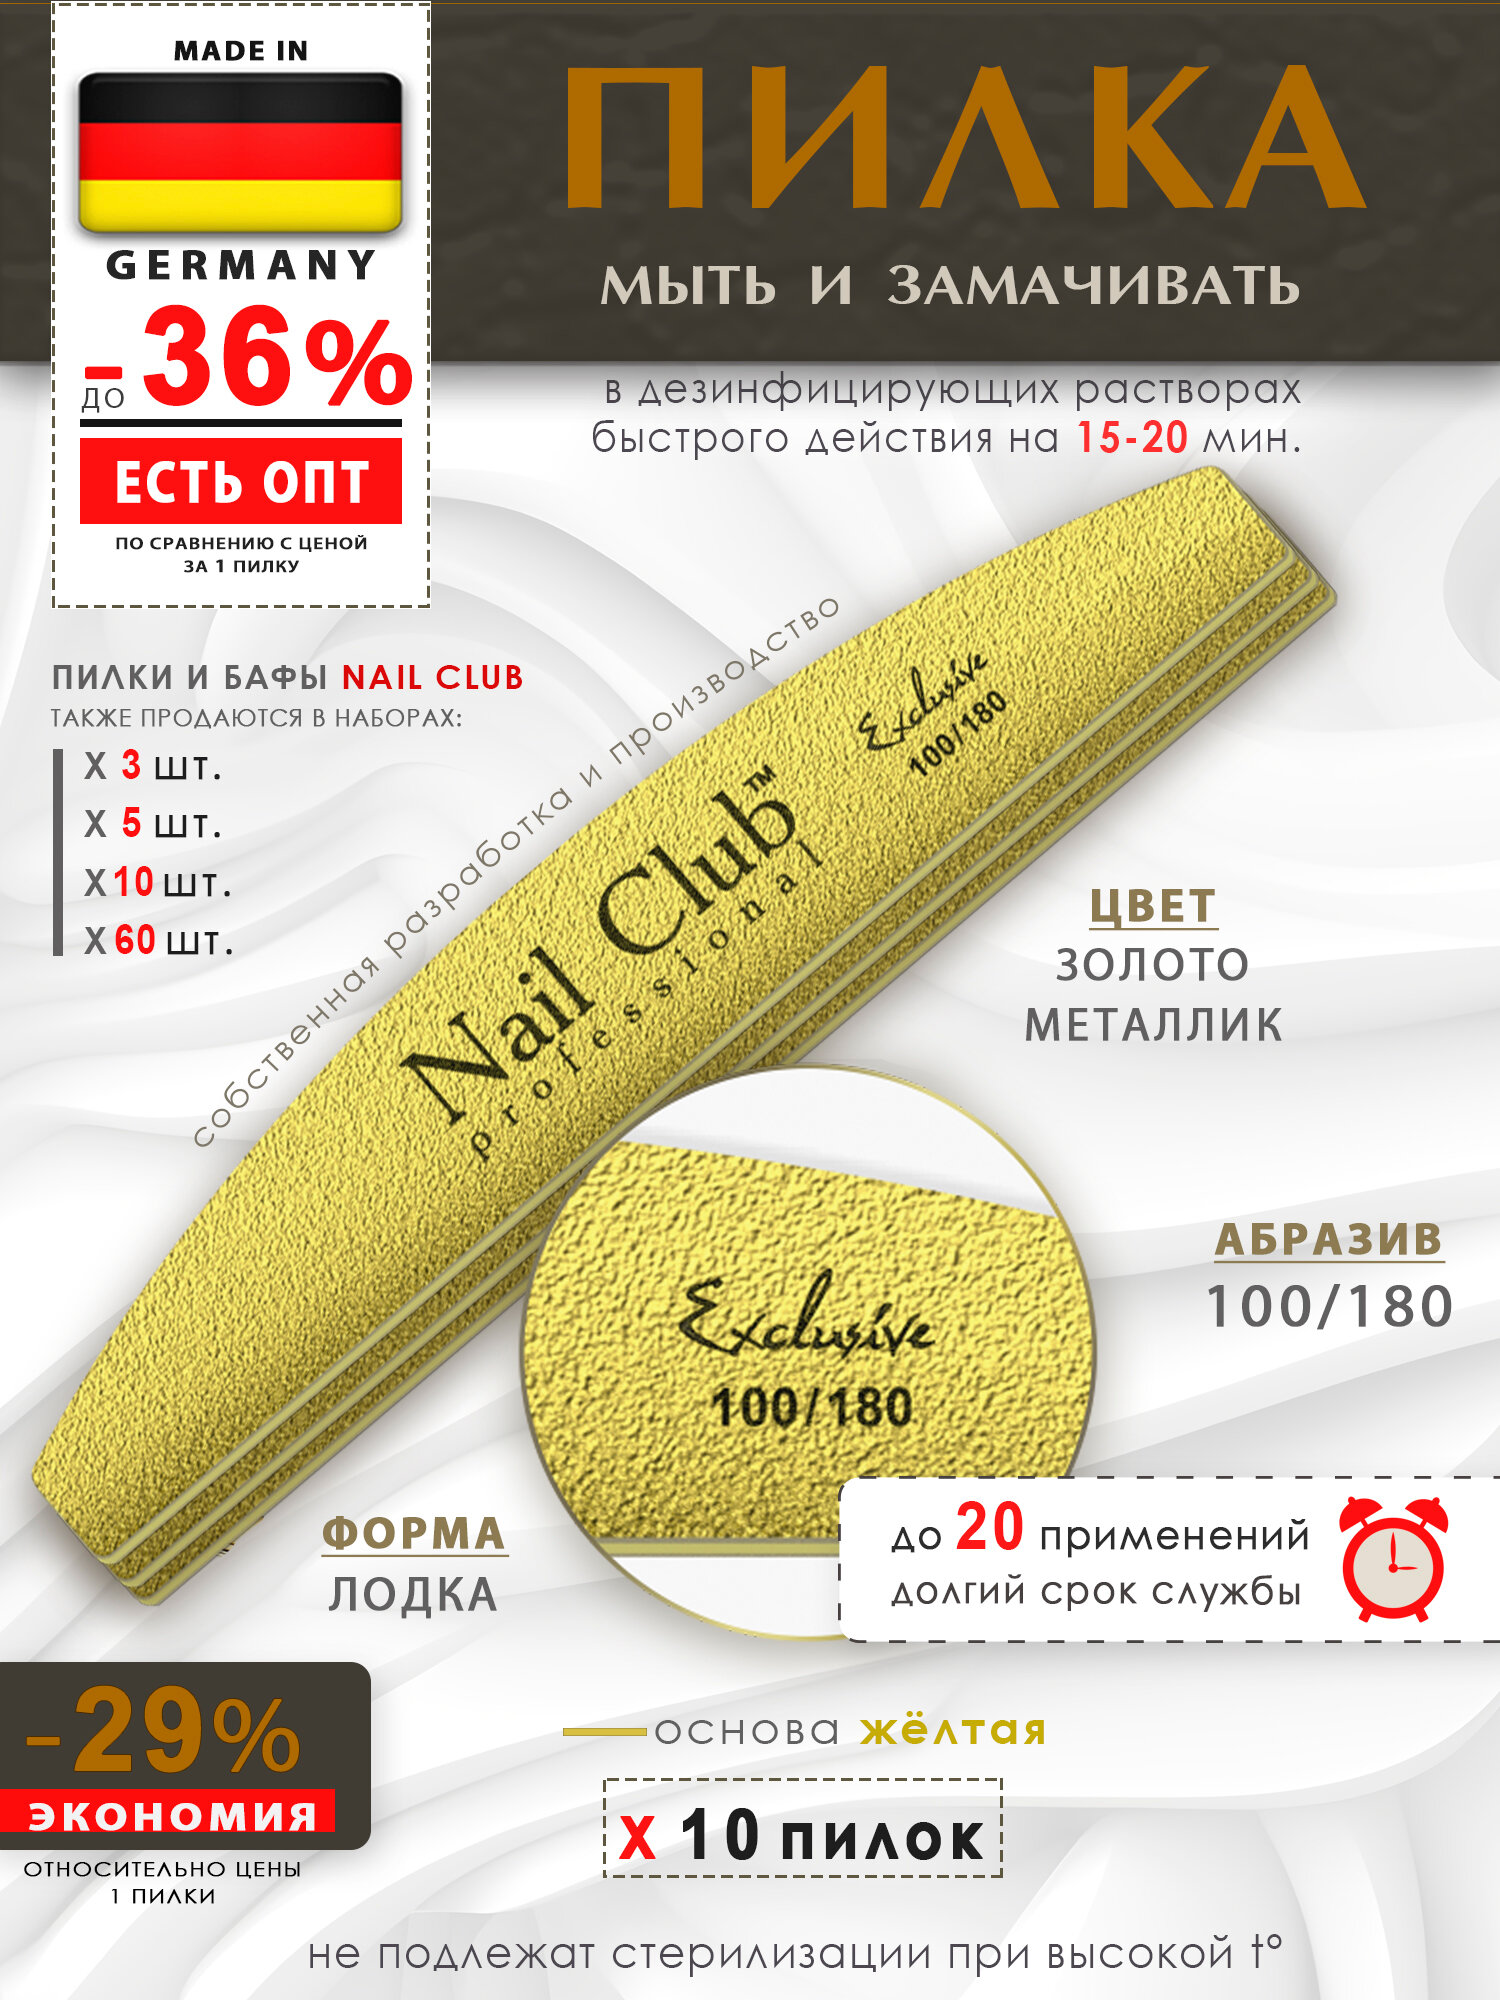 Nail Club professional Маникюрная пилка для опила ногтей золотая, серия Exclusive, форма лодка, абразив 100/180, 10 шт.